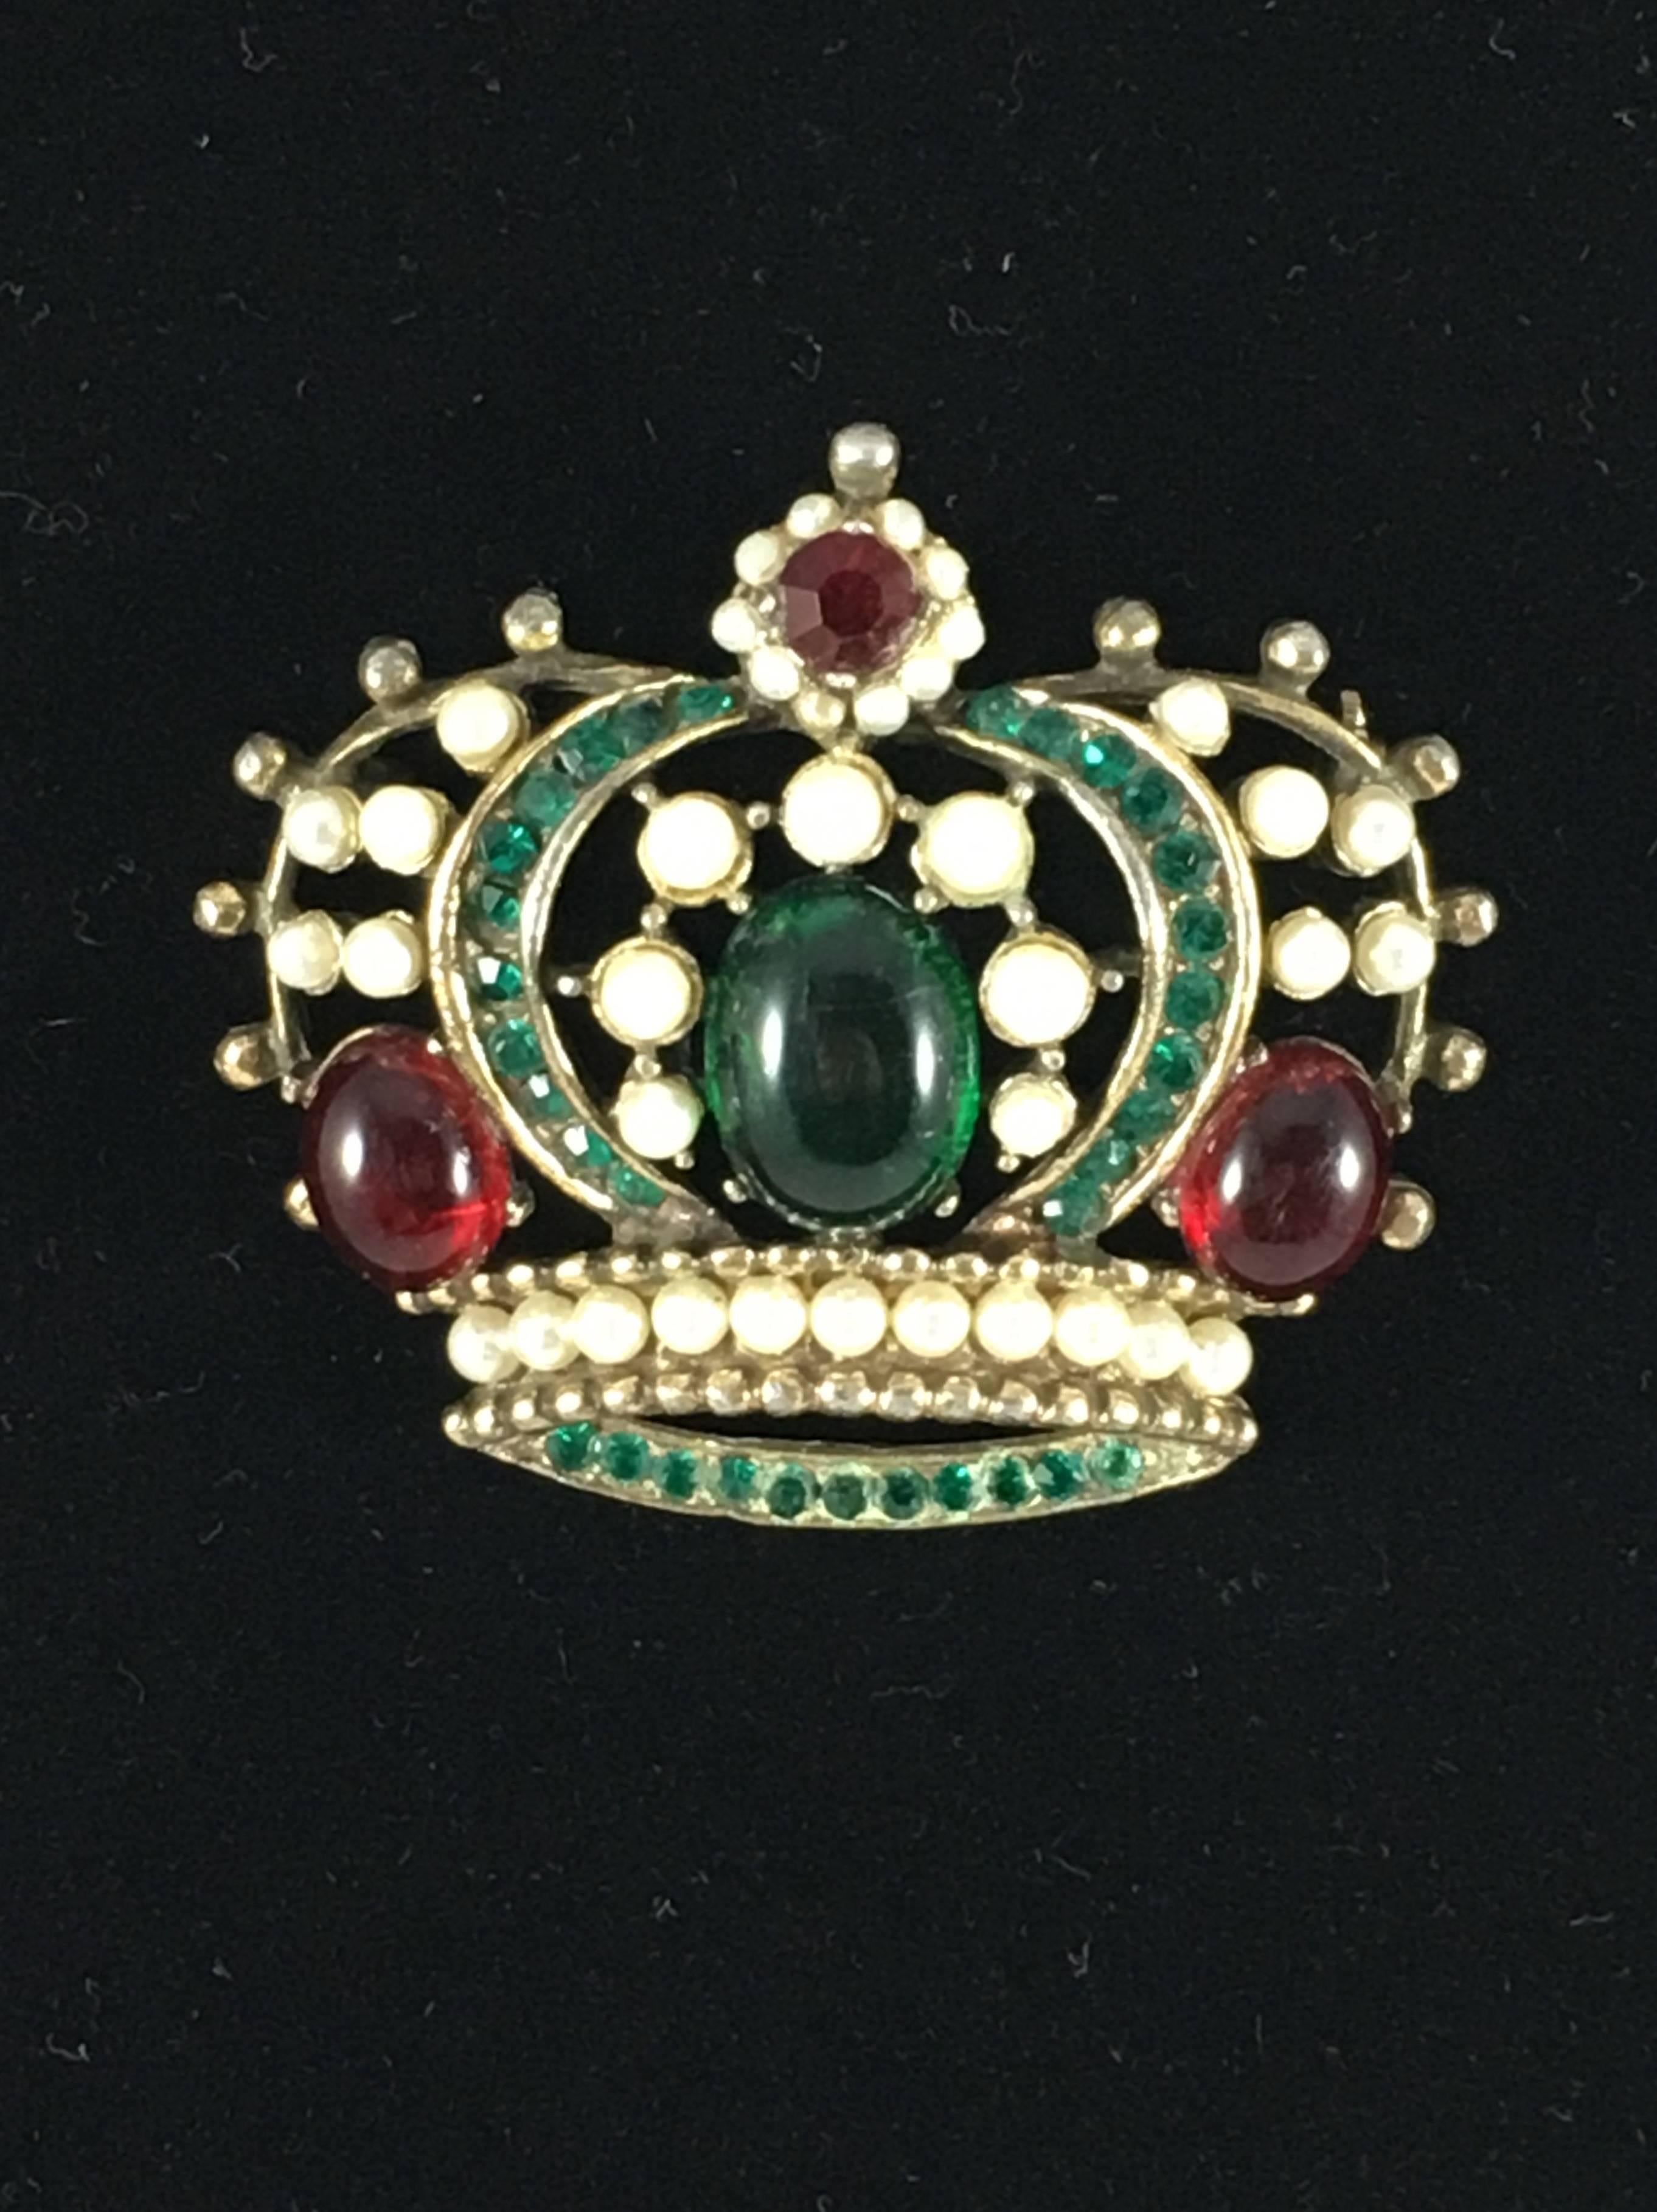 Women's or Men's Weiss Crown Brooch Pendant 1950s